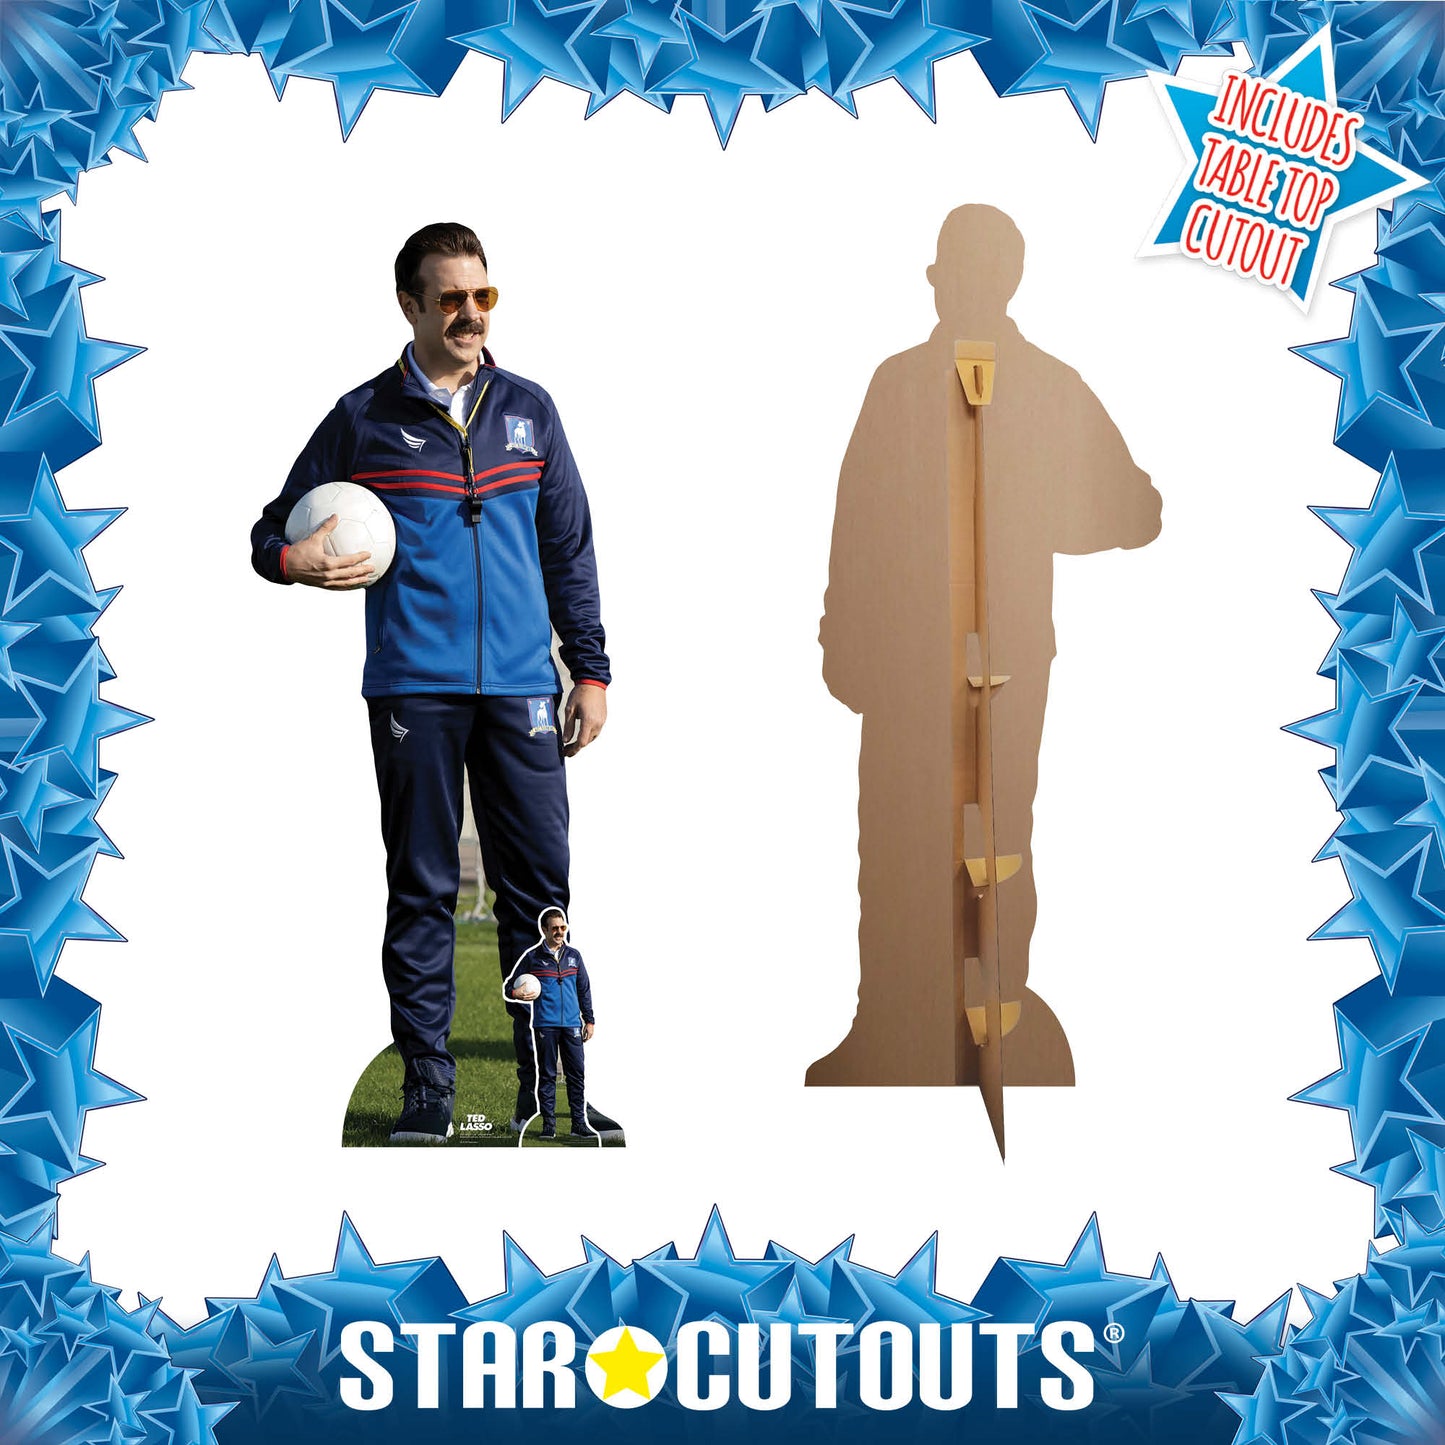 Ted Lasso Jason Sudeikis with Football Cardboard Cutout Lifesize